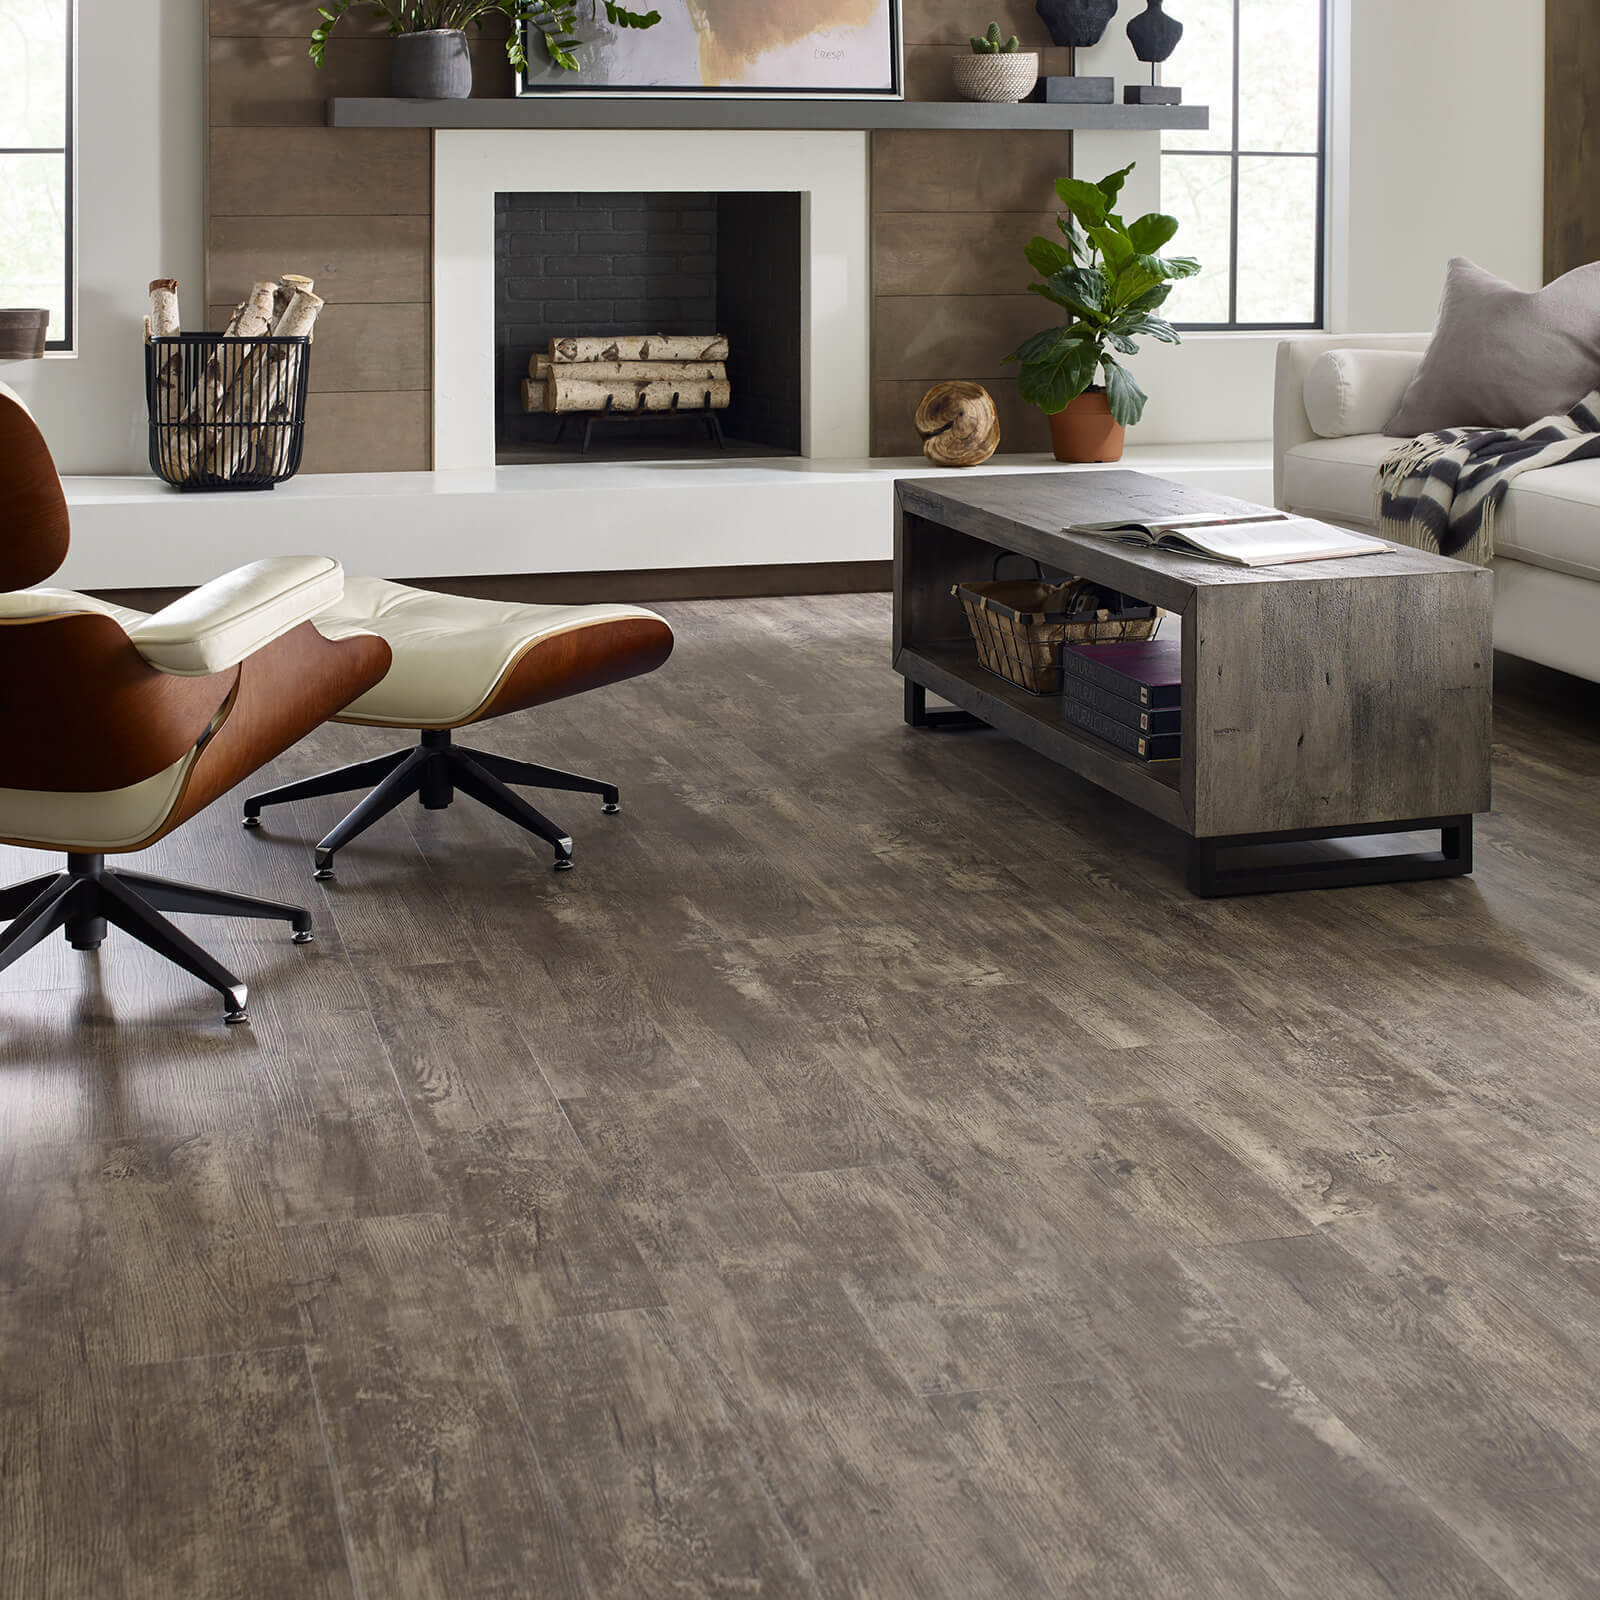 Luxury vinyl flooring in living room | IQ Floors